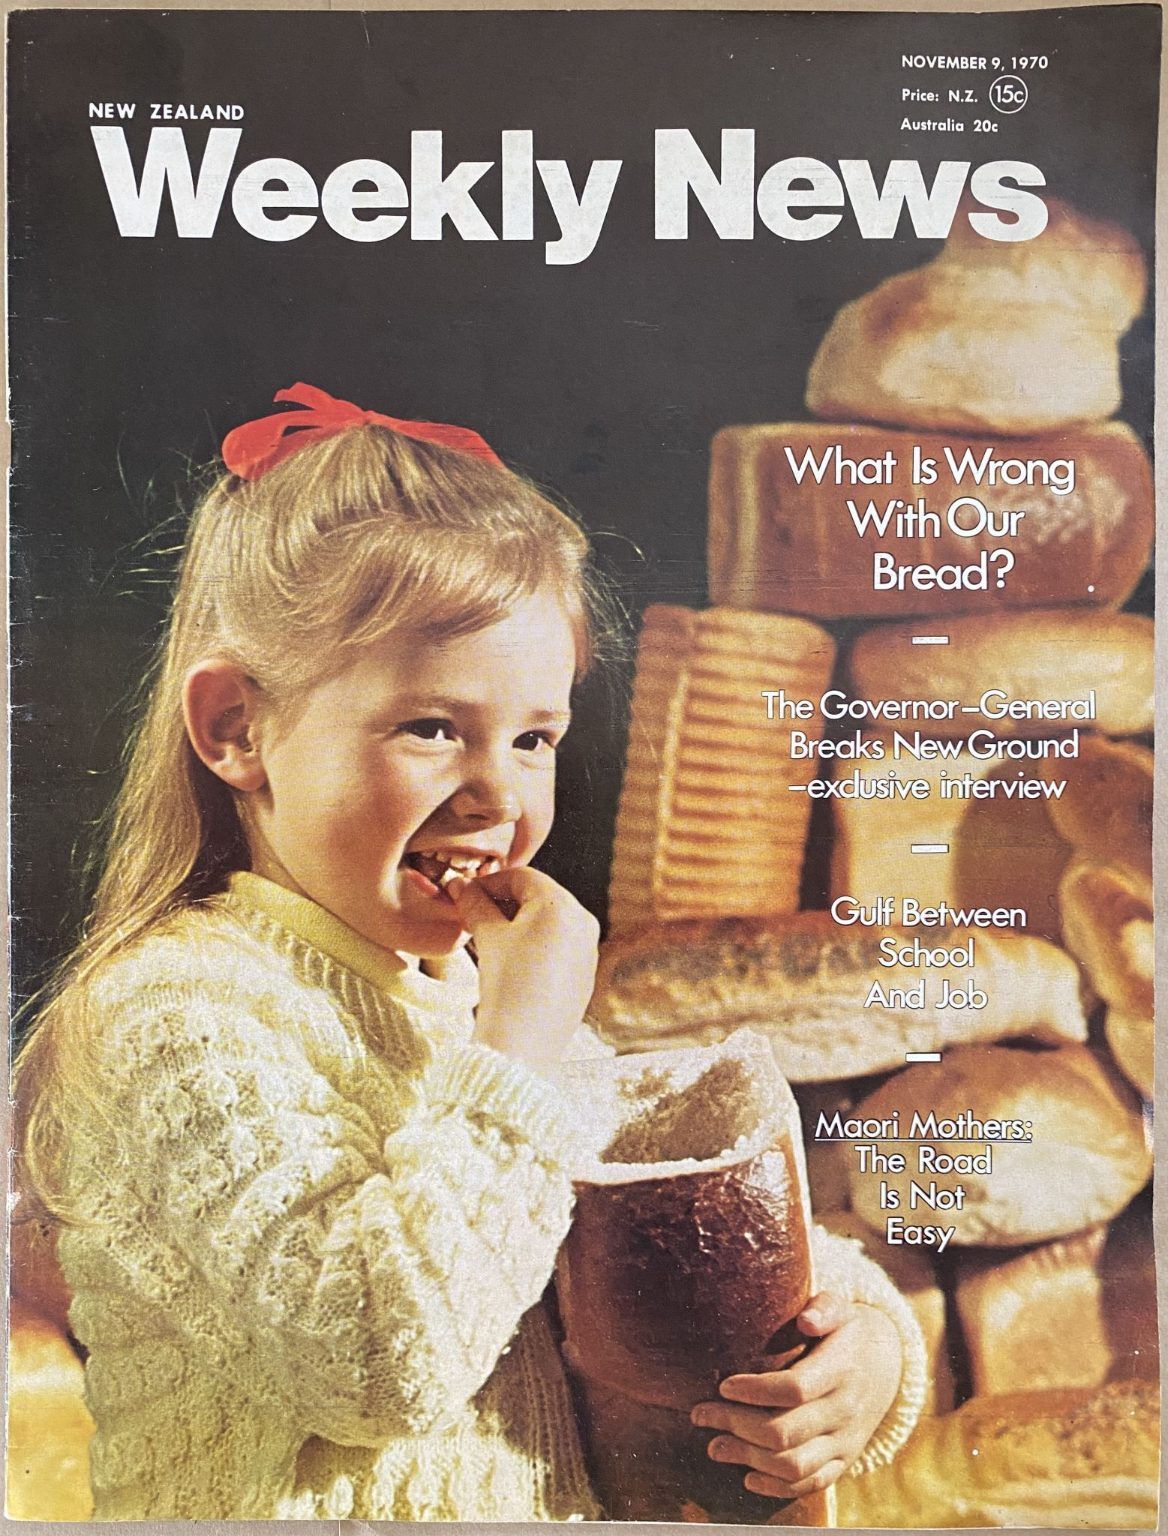 OLD NEWSPAPER: New Zealand Weekly News, No. 5579, 9 November 1970